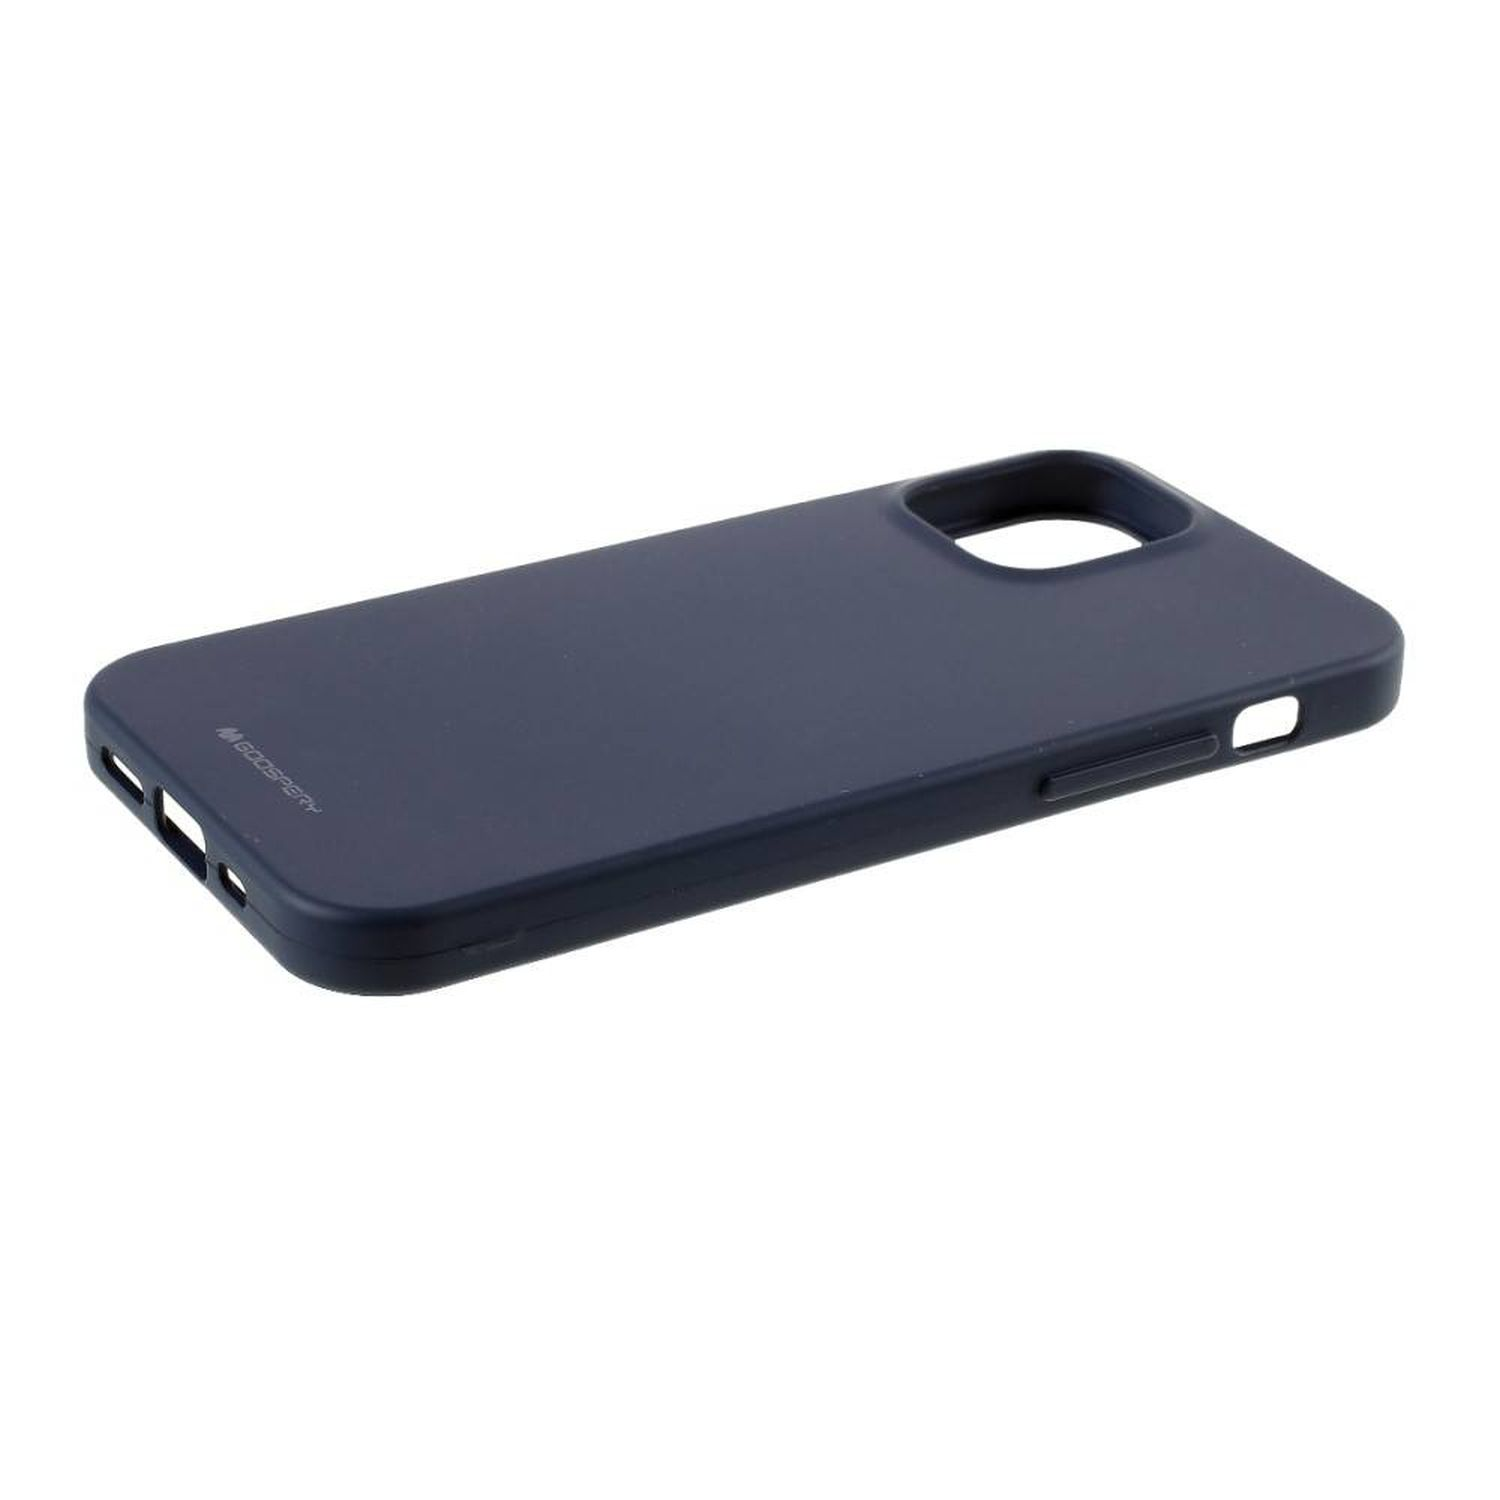 Pro, Bumper, Jelly Case, iPhone Soft Blau Apple, COFI 12